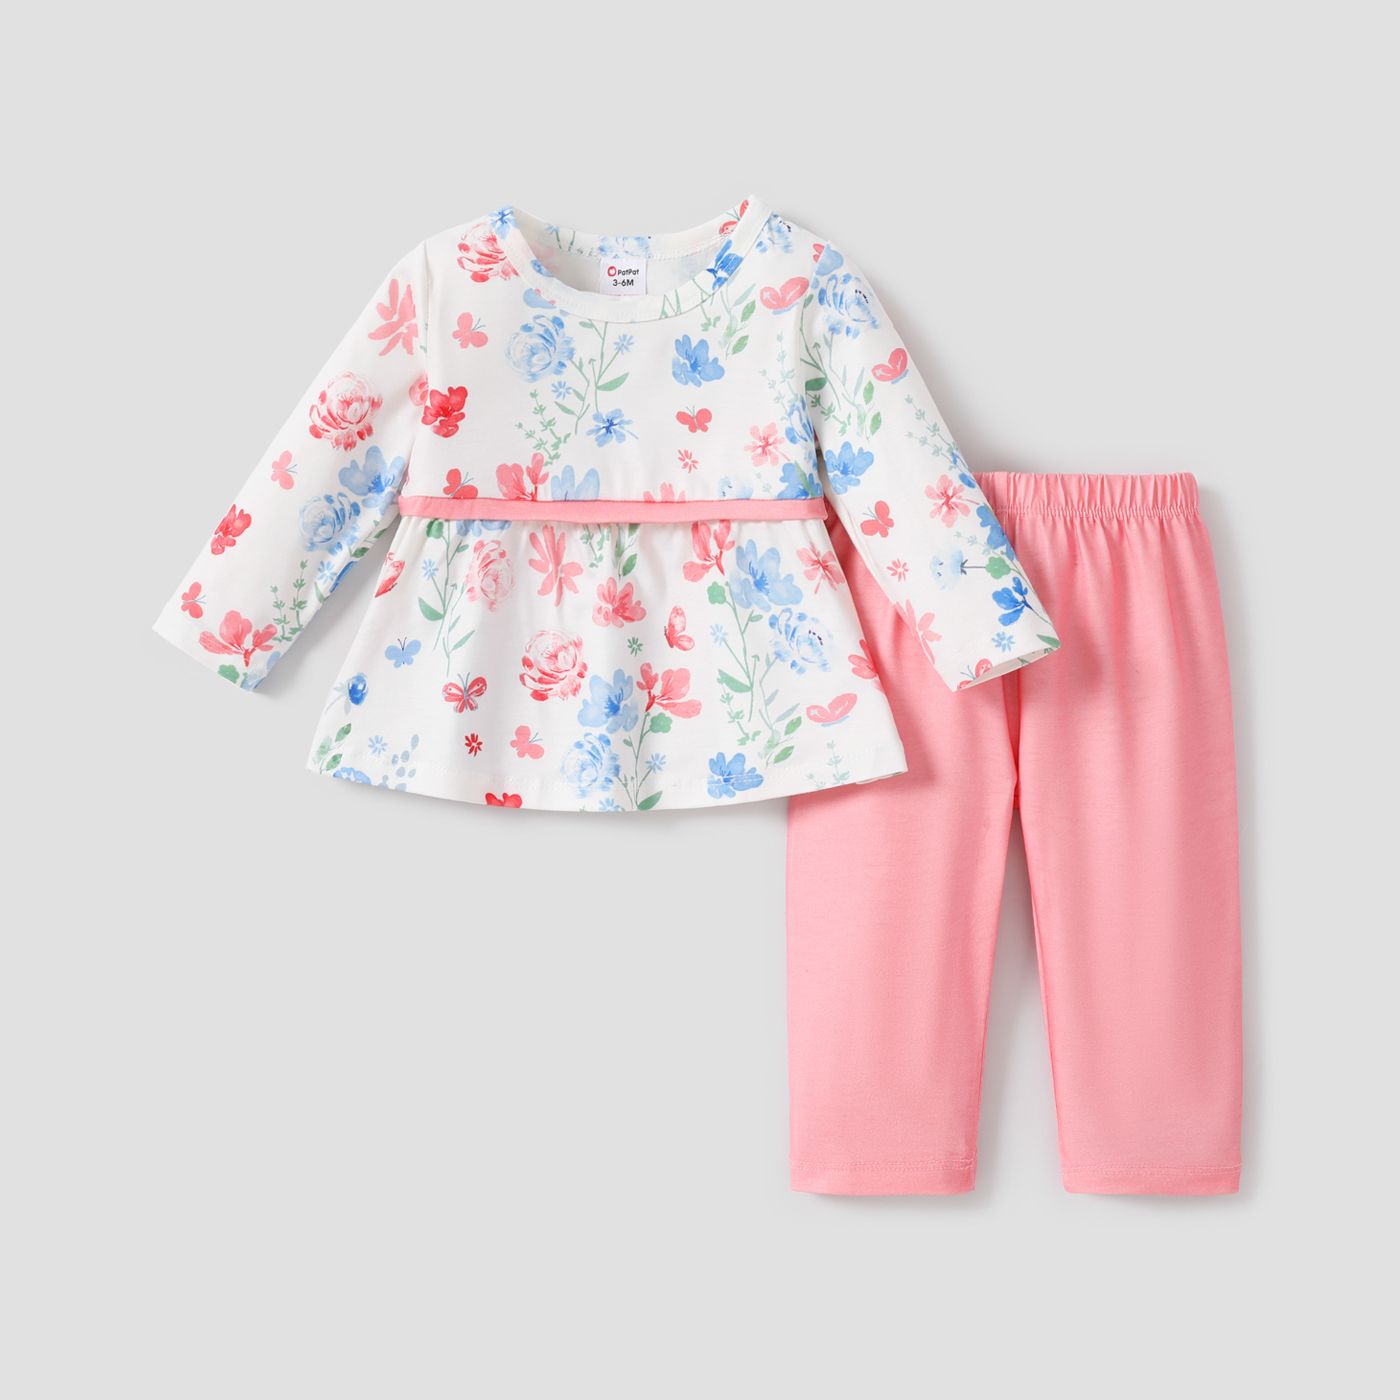 2PCS Baby/Toddler Girl Pretty Design Casual Pajama Set